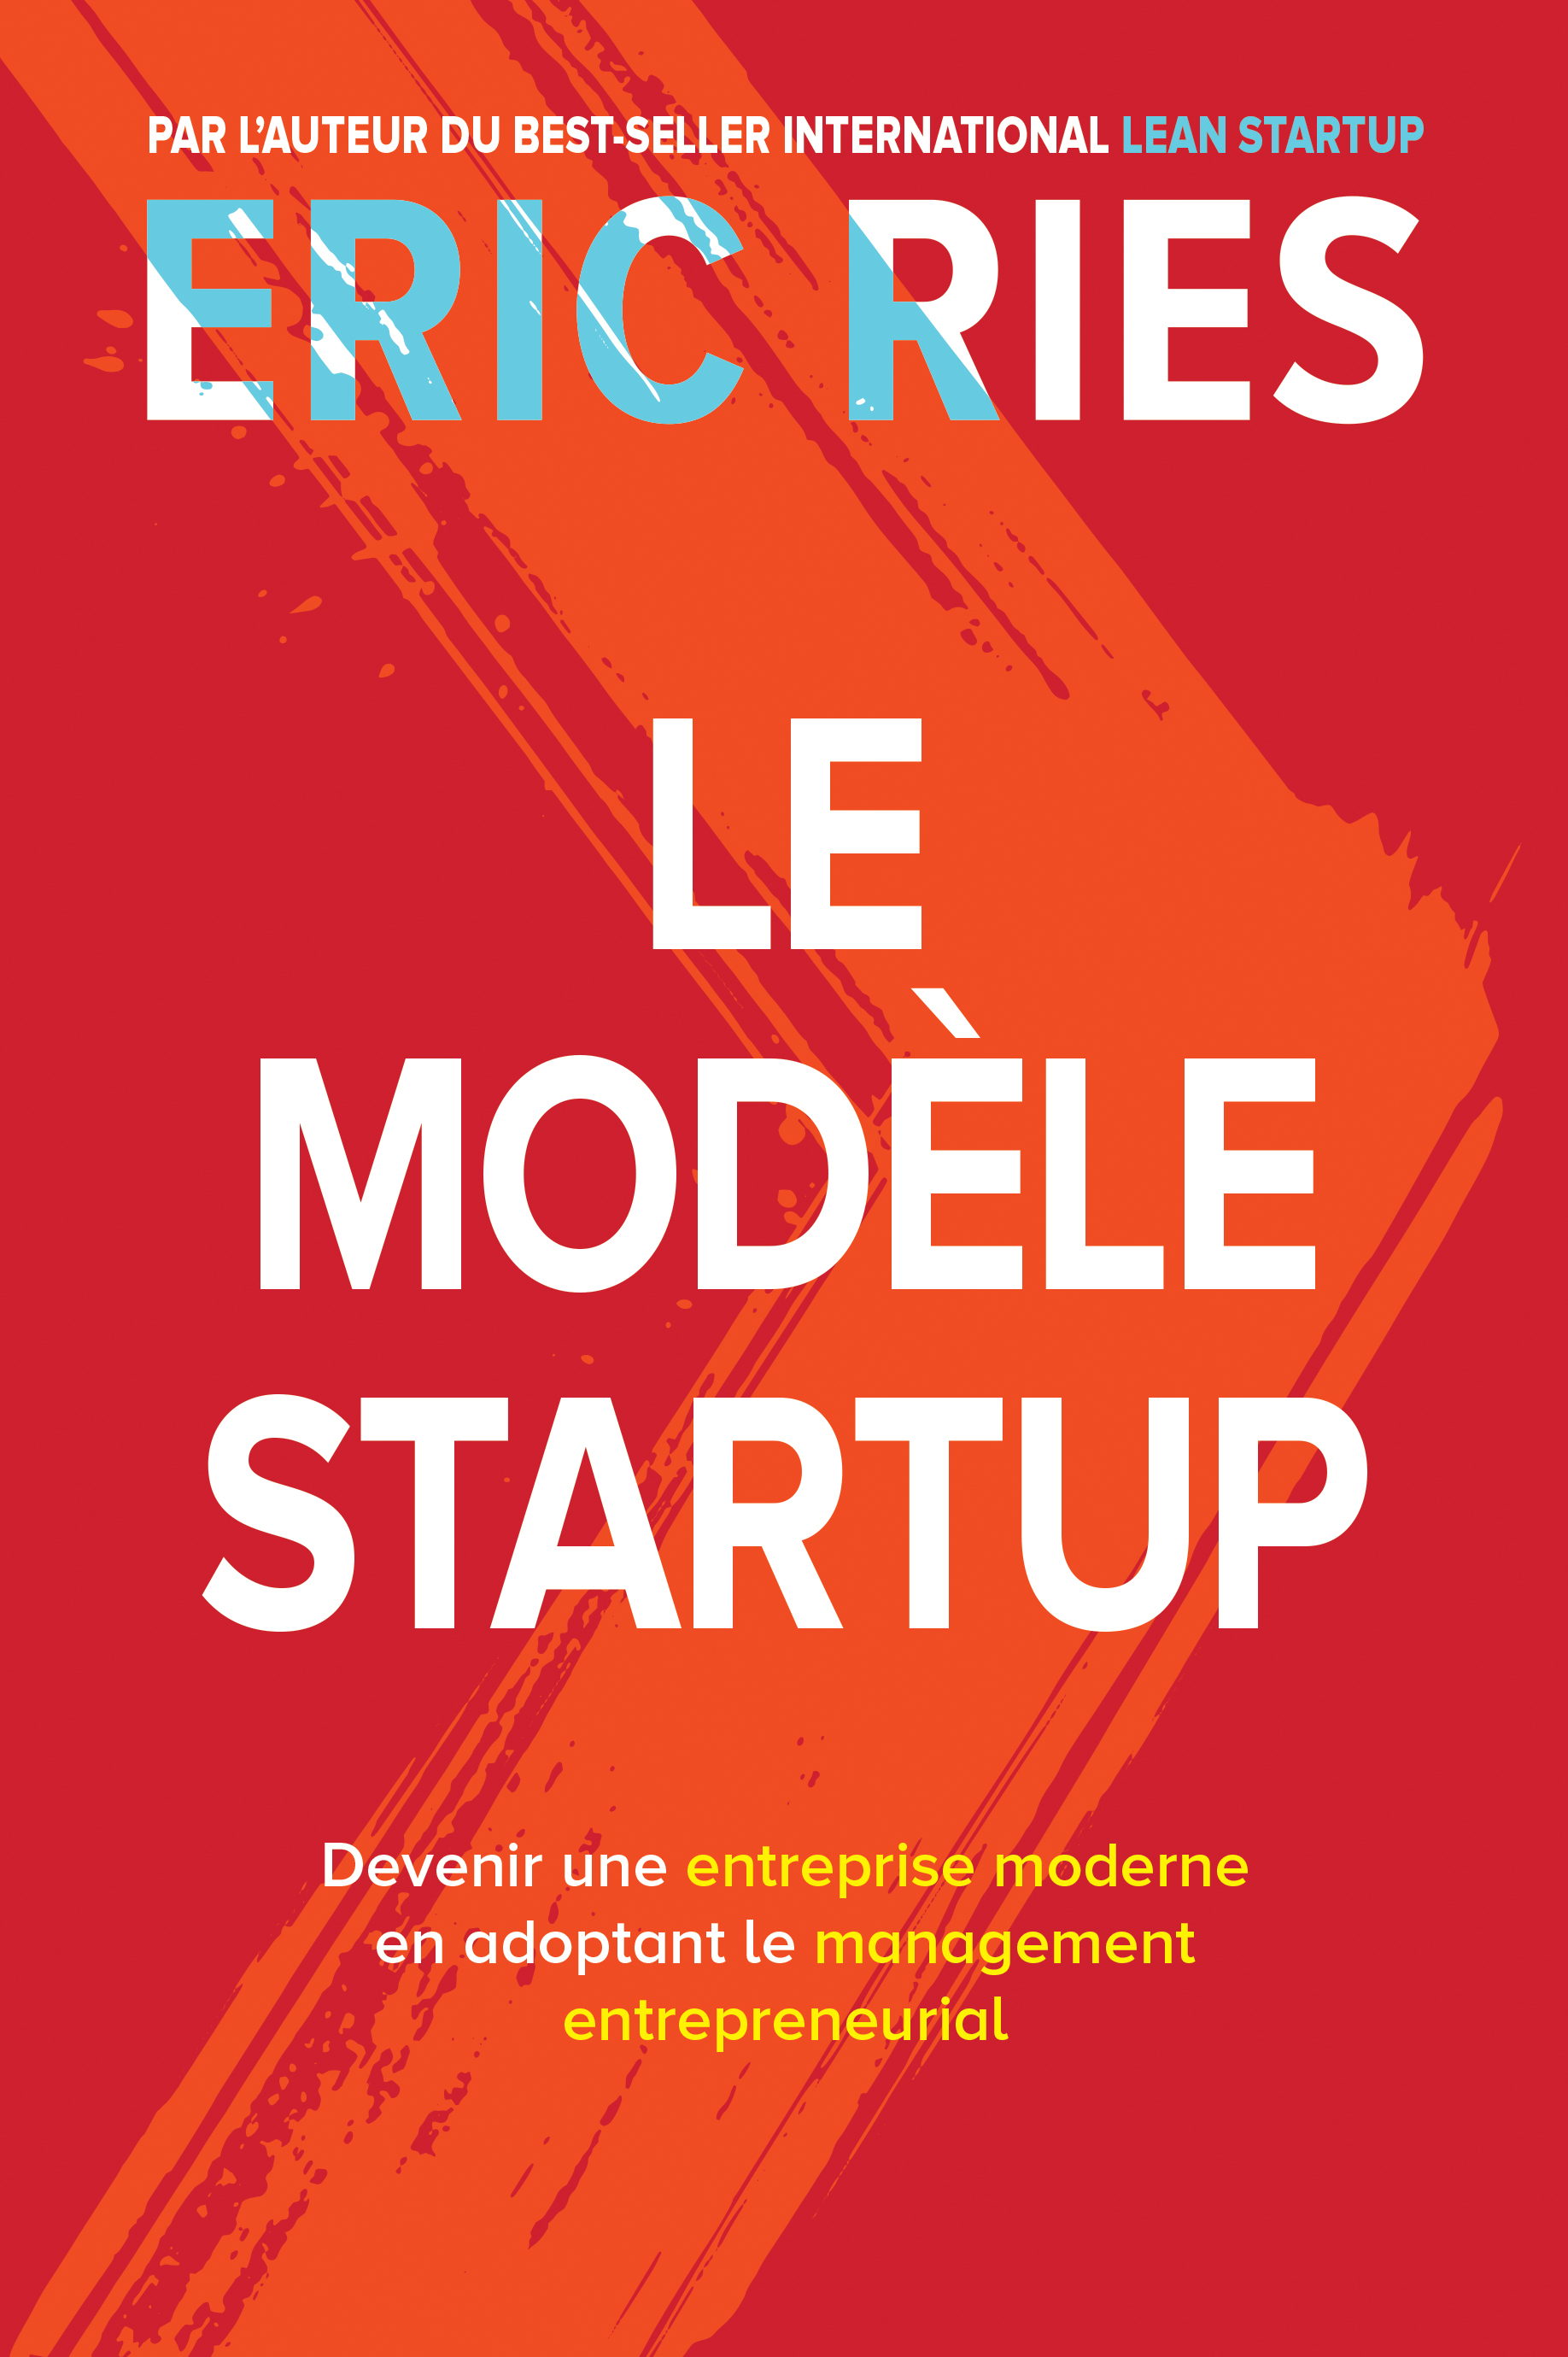 Le Modèle StartUp - Erice Ries - Pearson